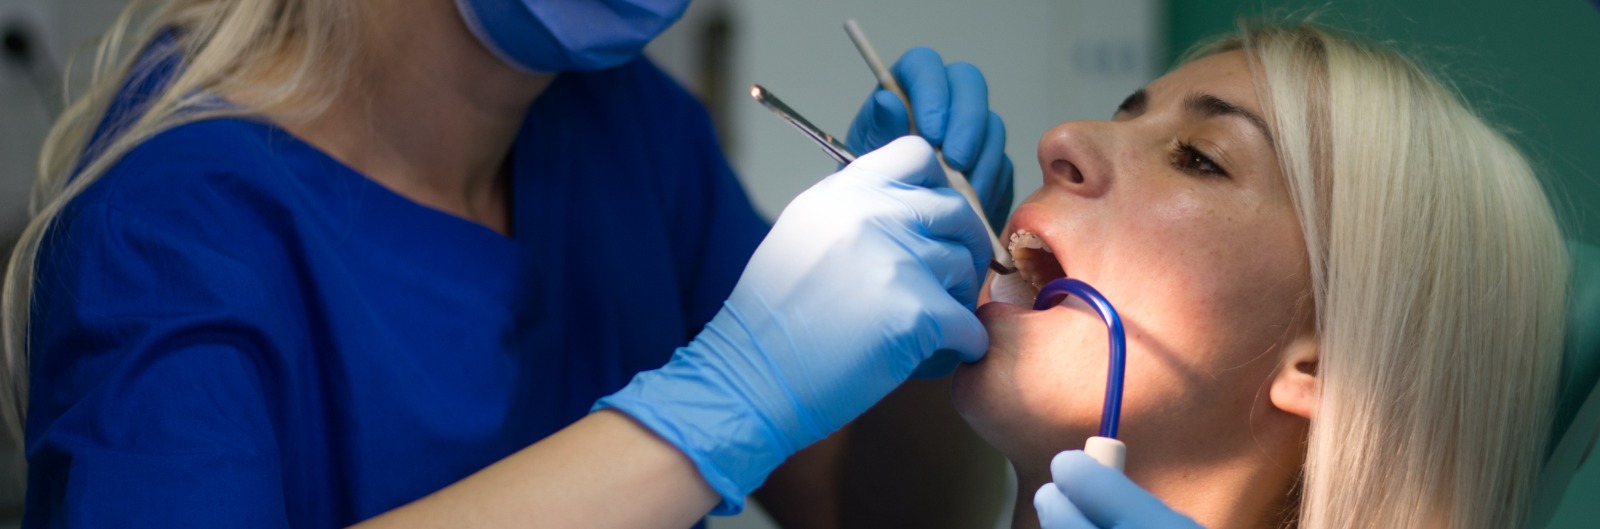 female-dentist-working-on-patients-teeth-picture-id1395179512.jpg